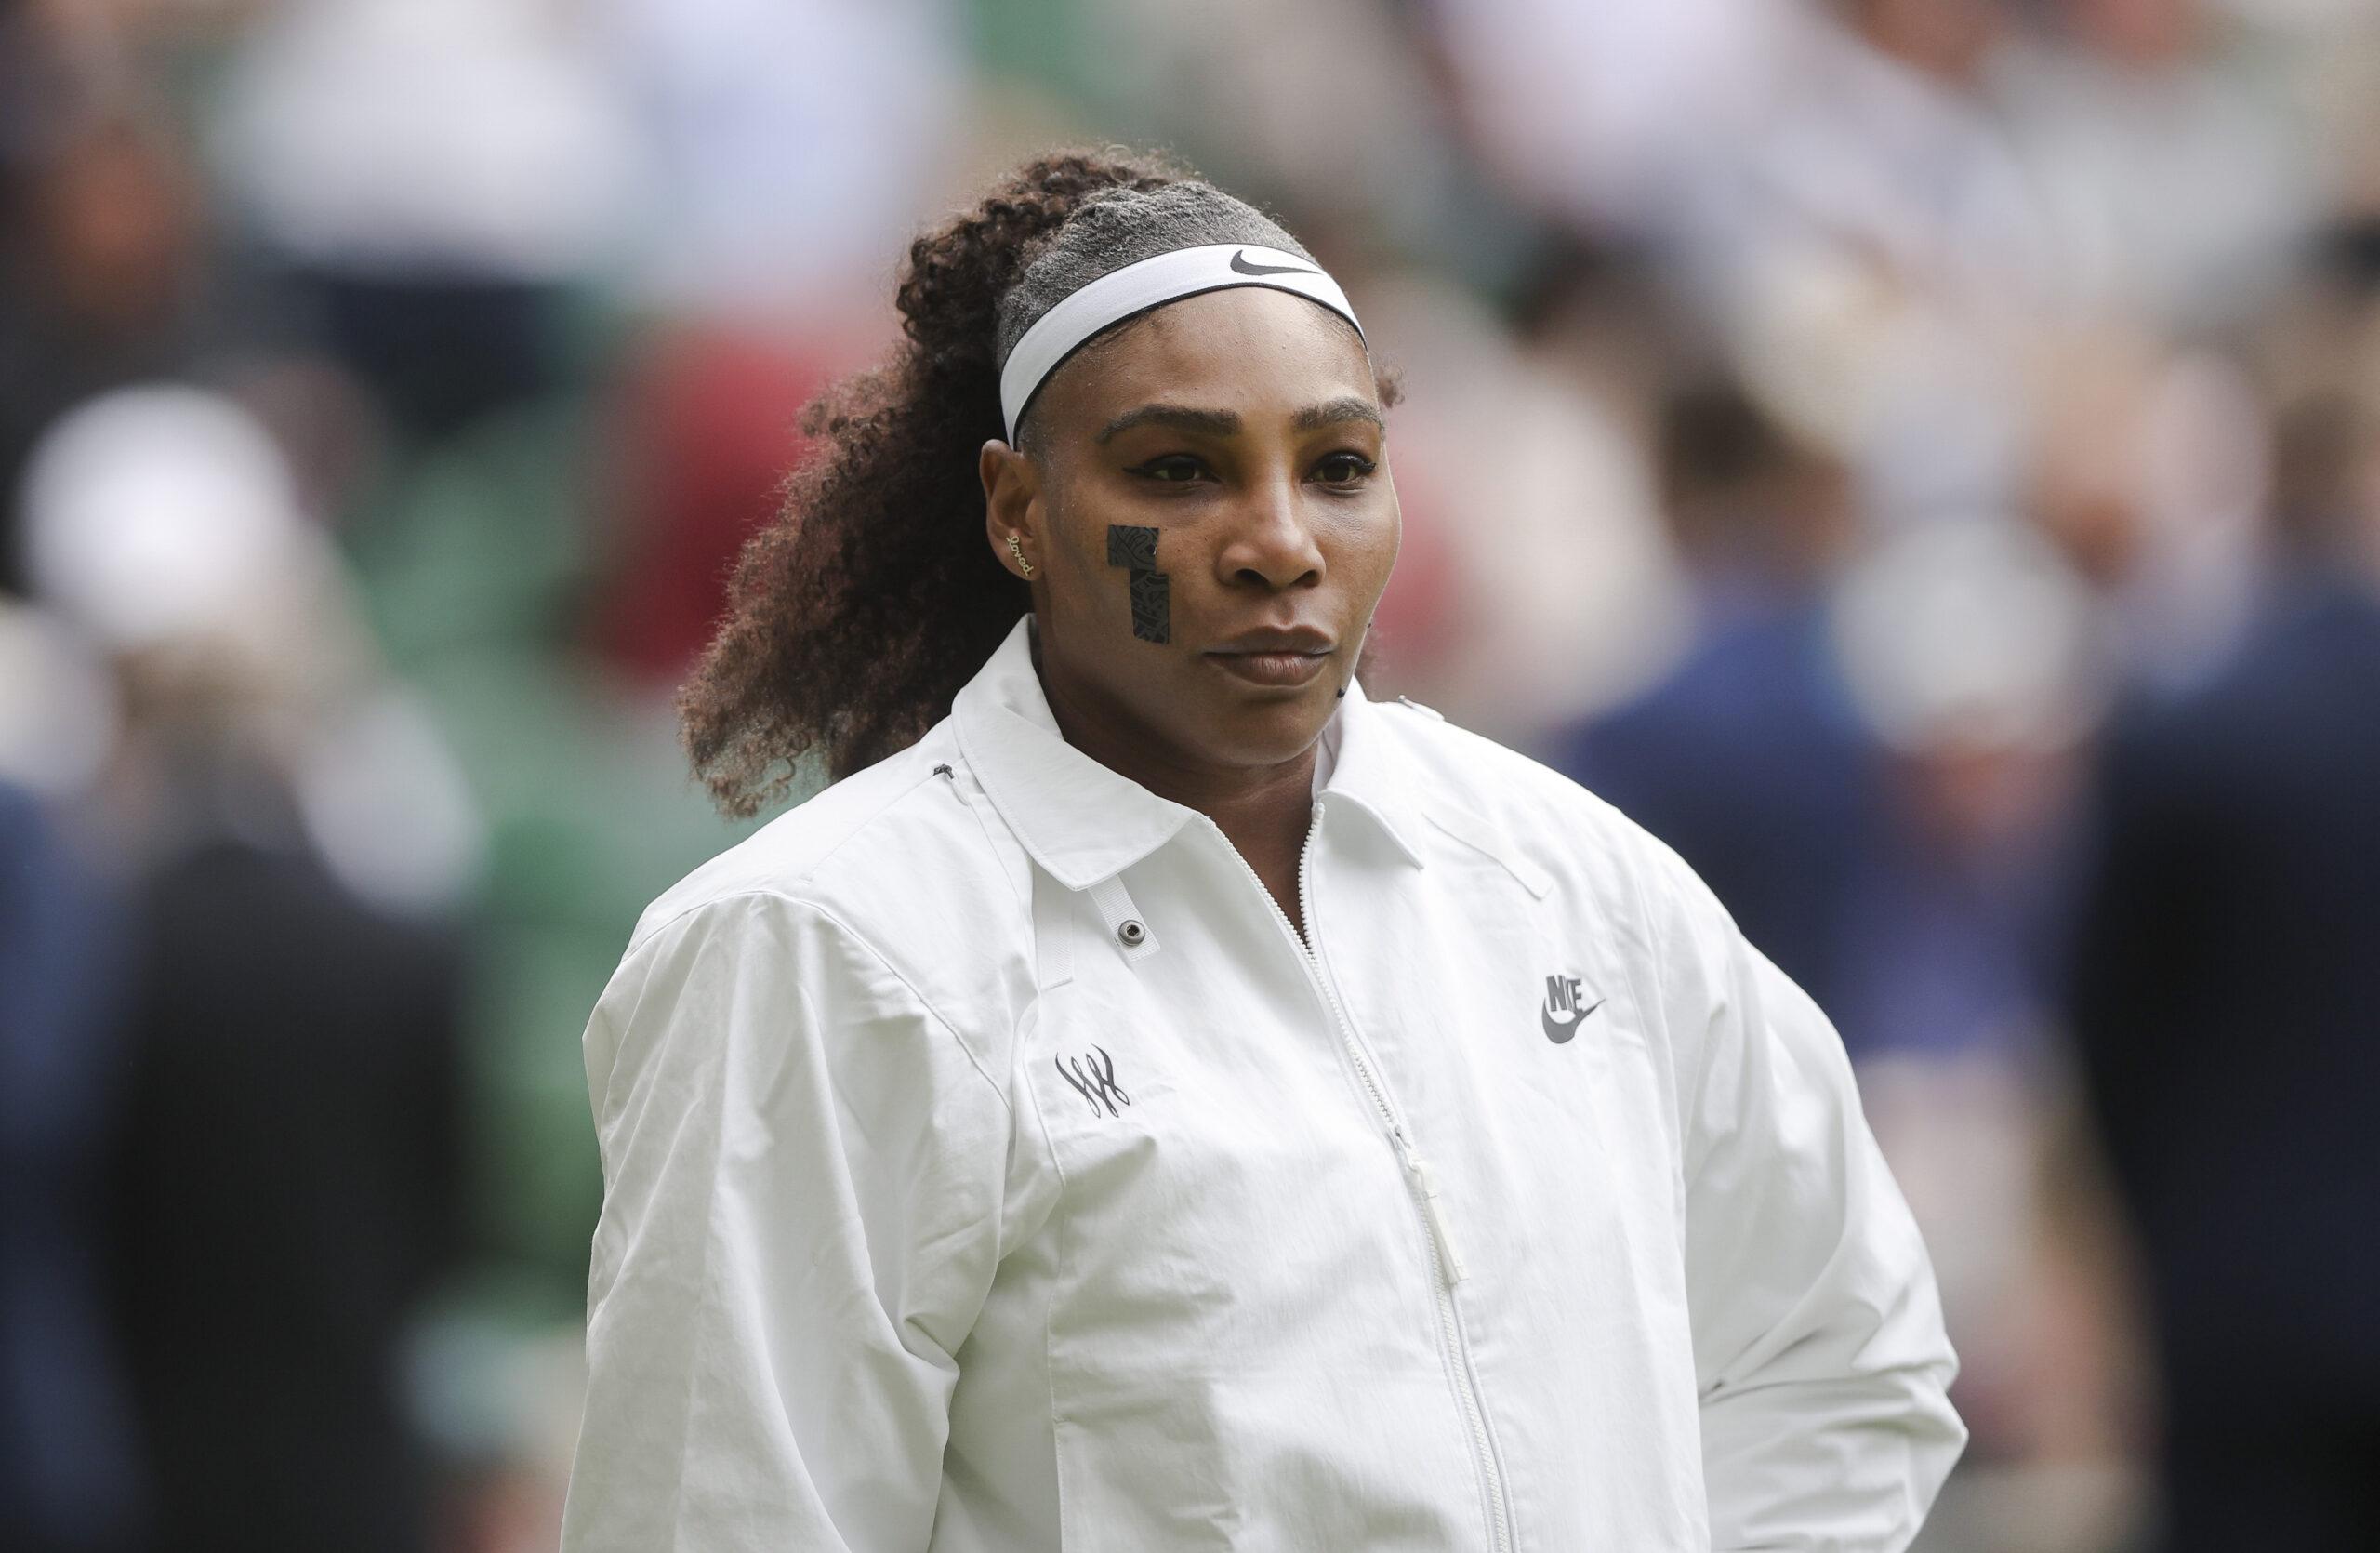 Serena Williams at Wimbledon Live Day 2